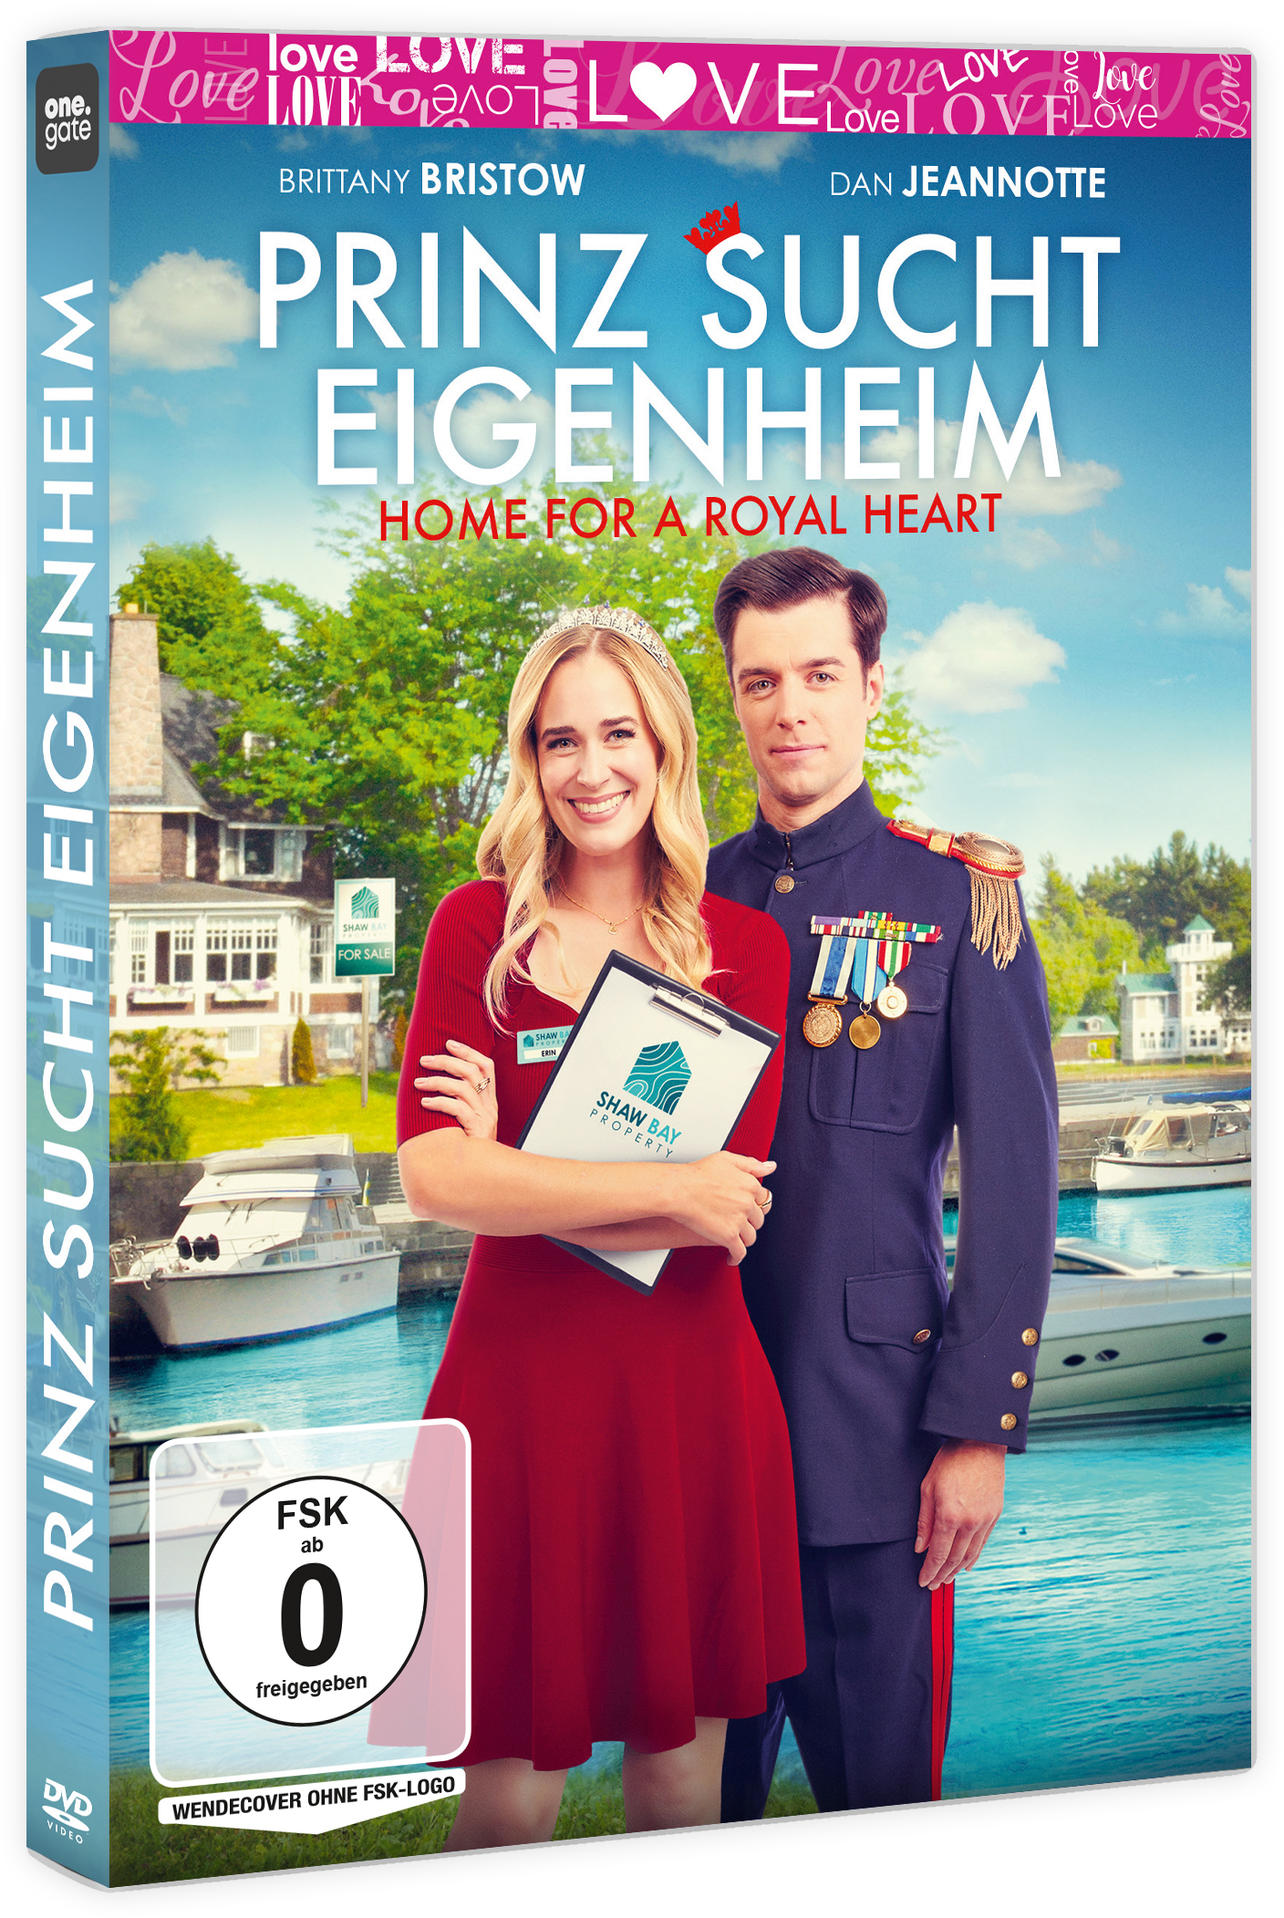 Prinz sucht Eigenheim - Home Heart DVD Royal a for